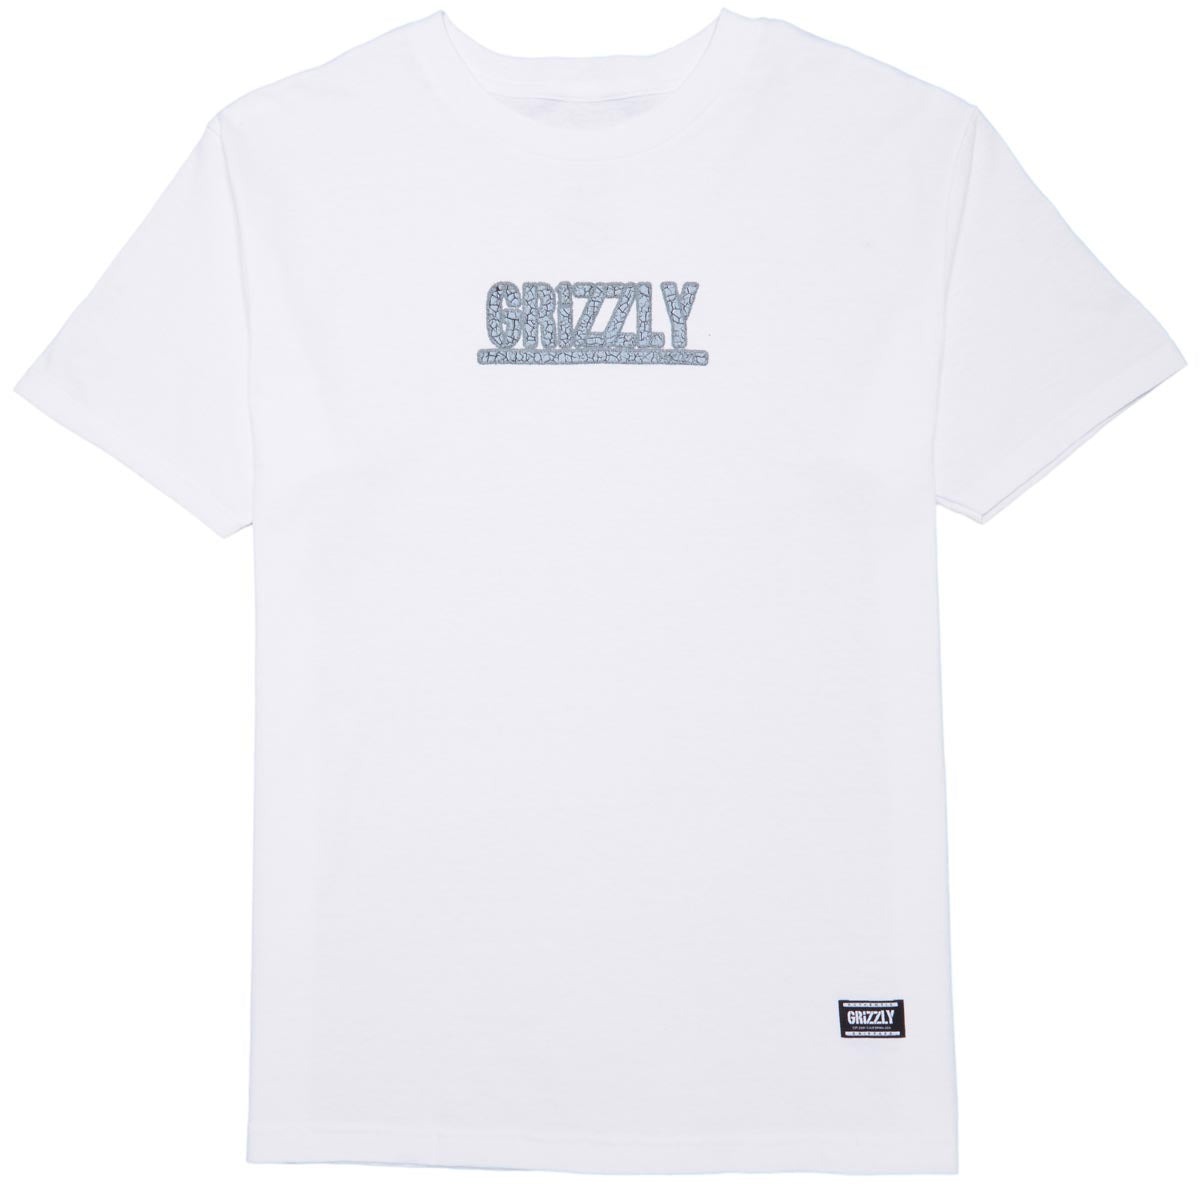 Grizzly Asphalt T-Shirt - White image 1